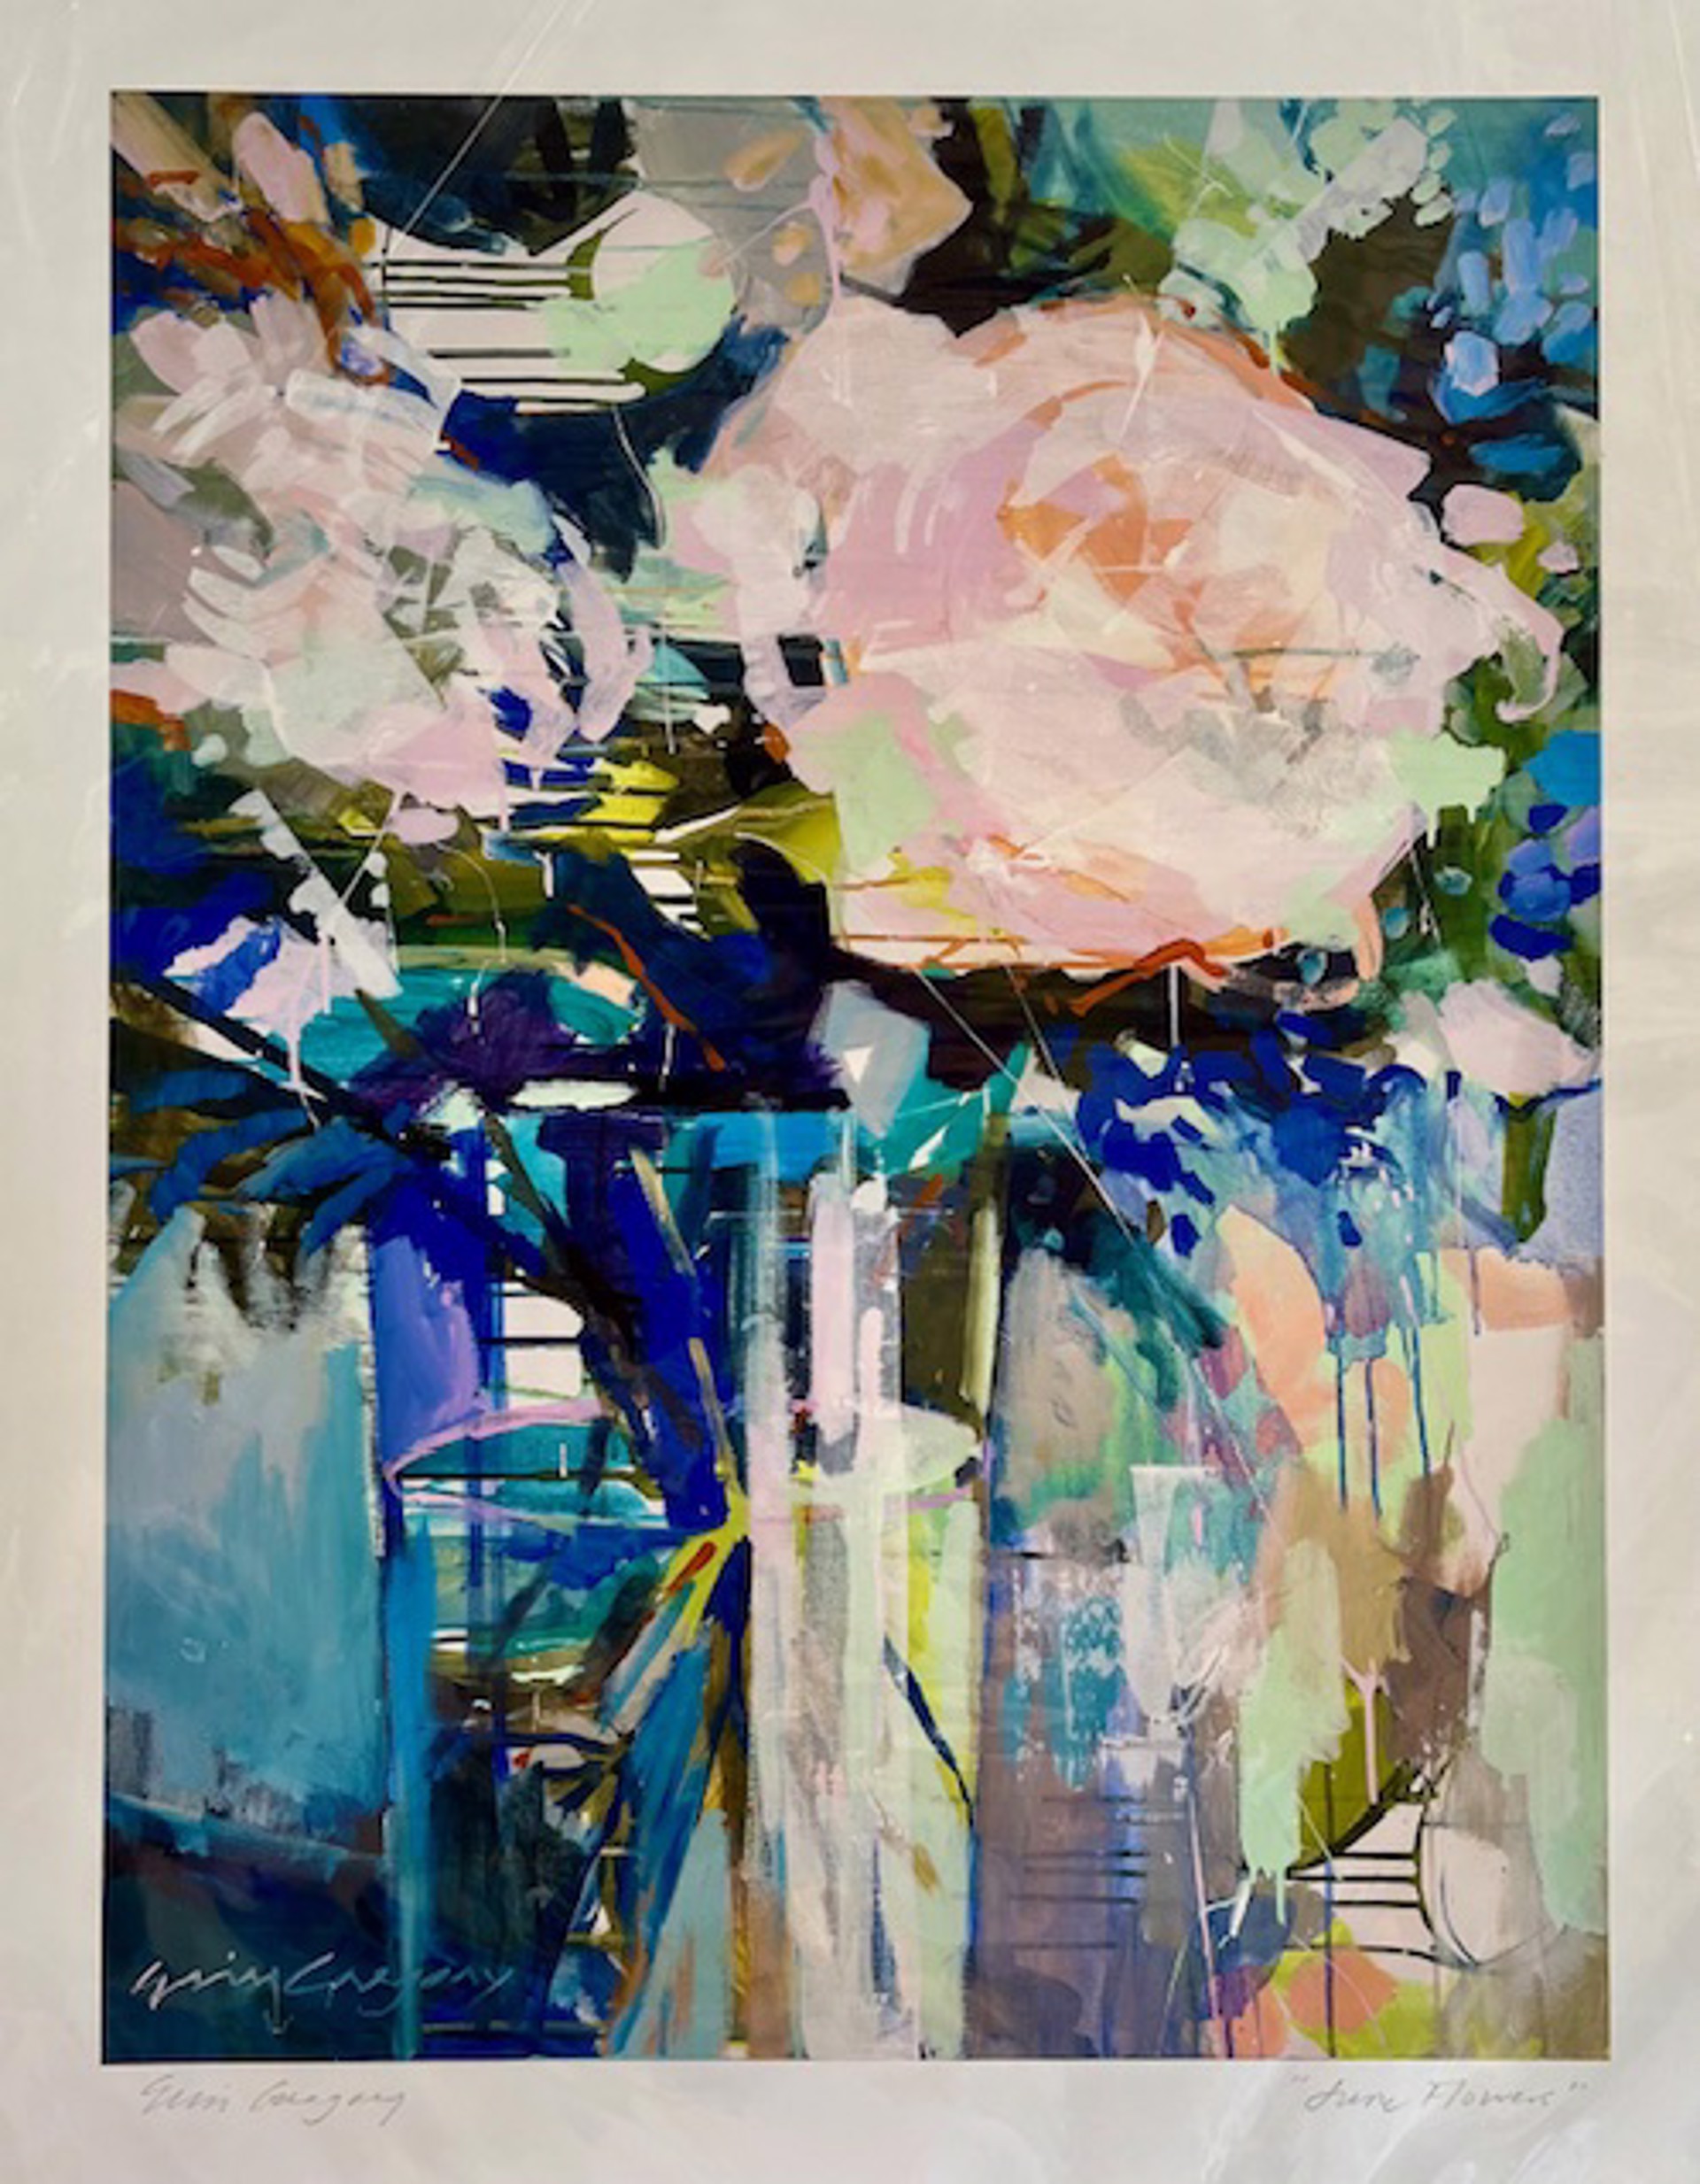 June Flowers by Erin Gregory